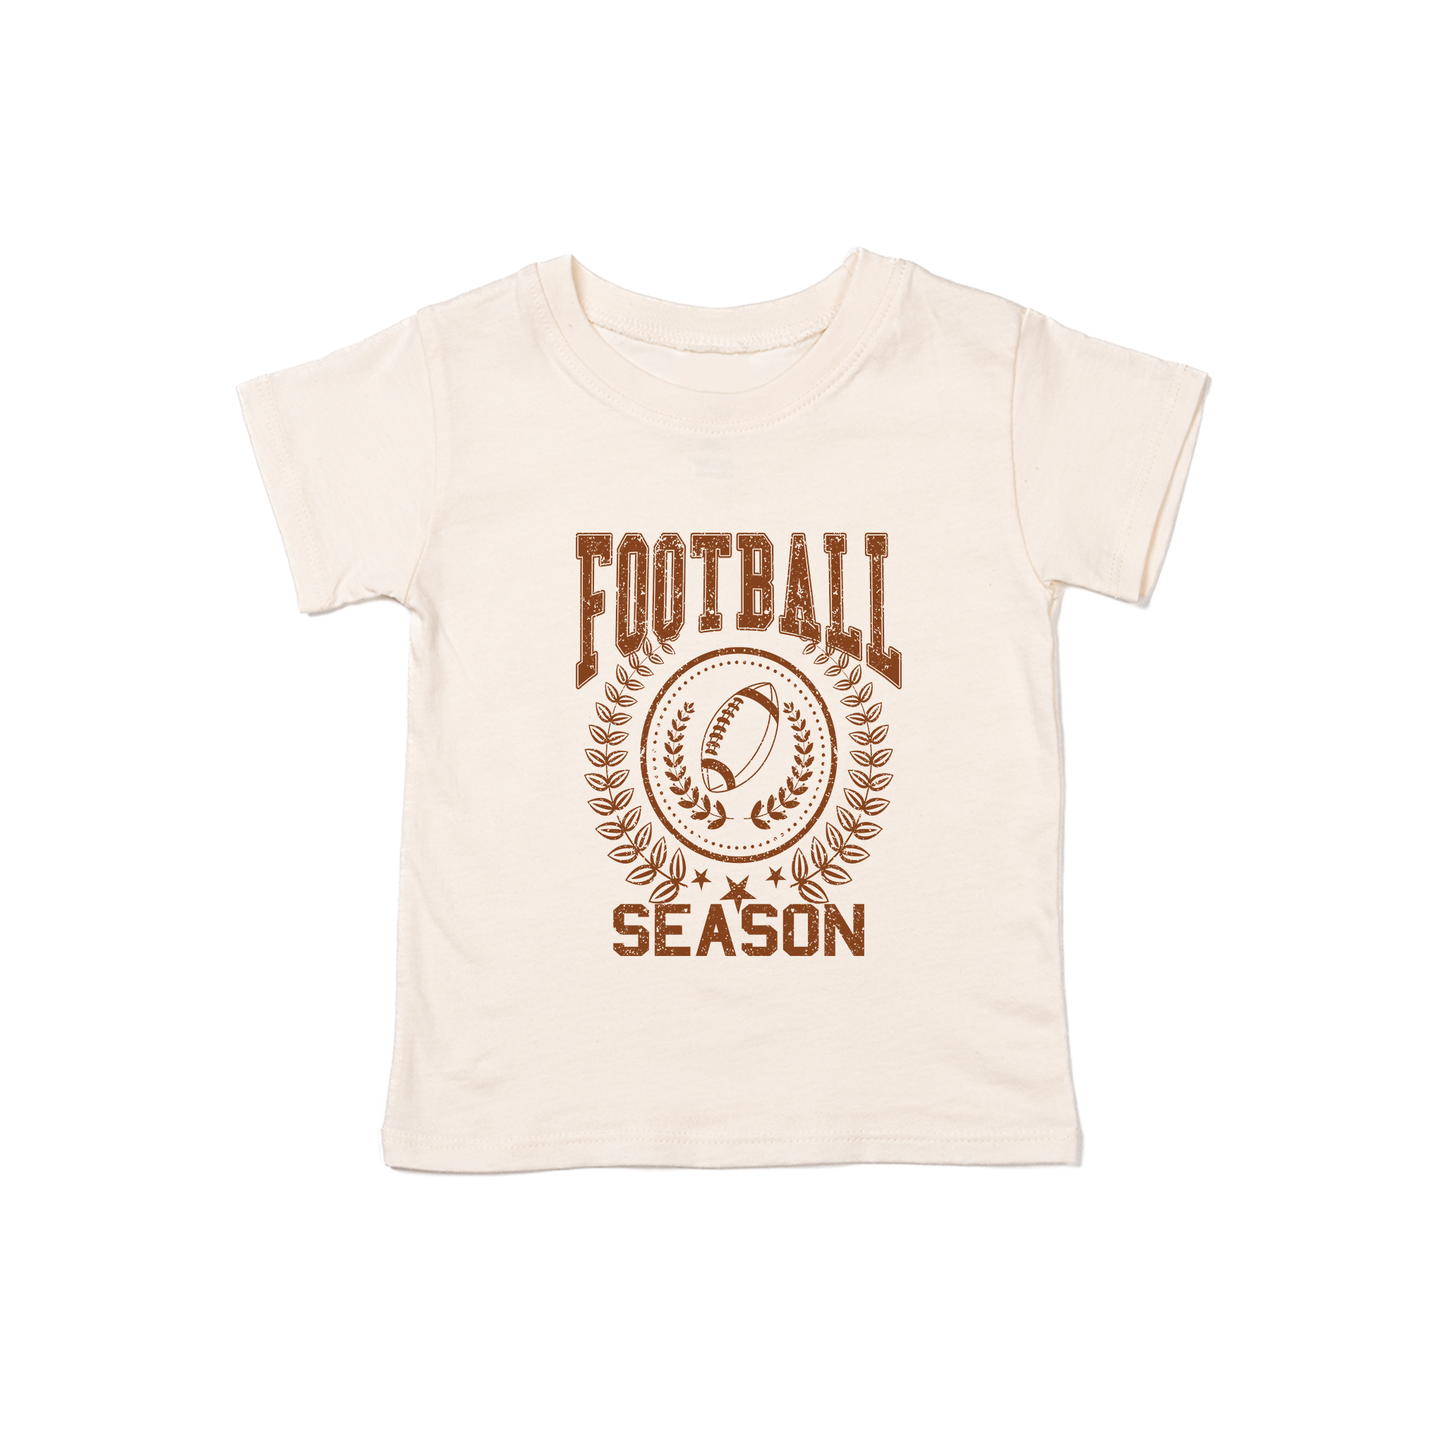 Football Season - Kids Tee (Natural)